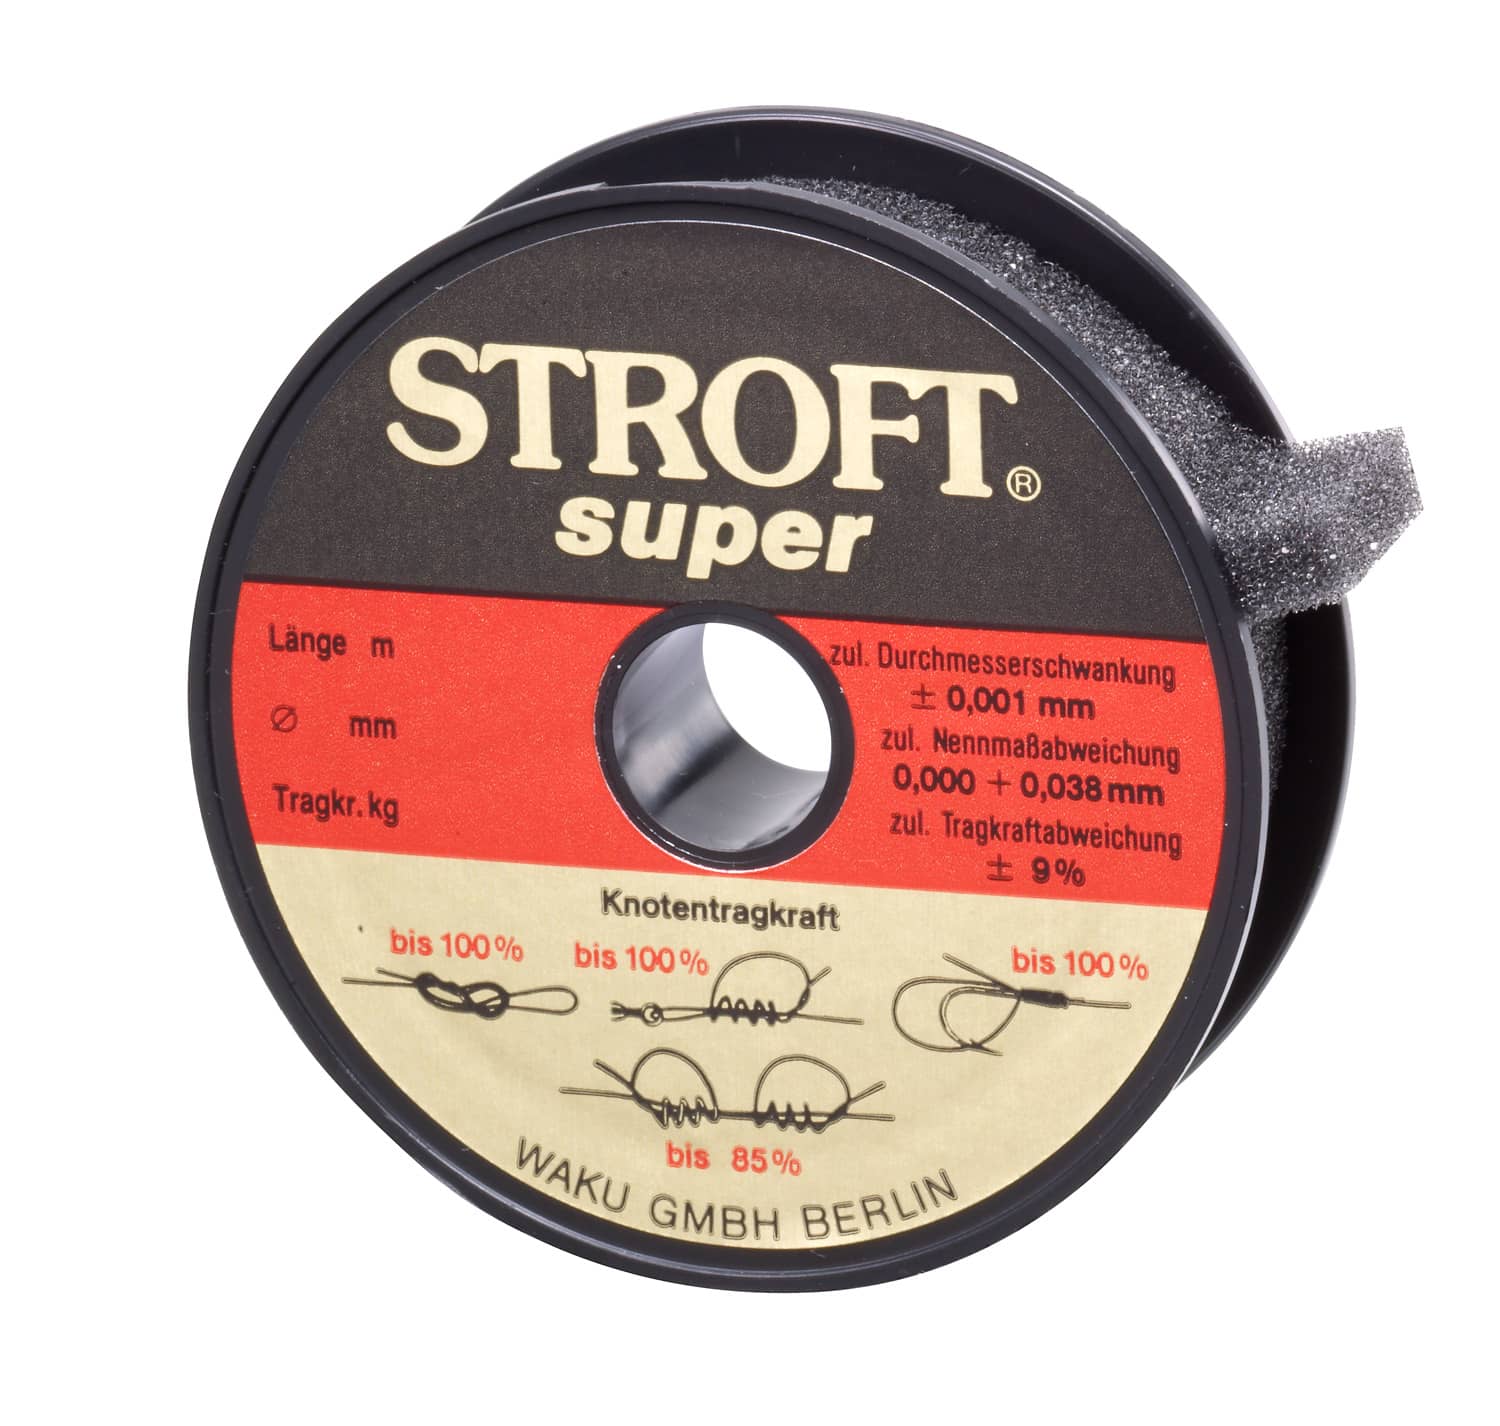 Stroft Super 100m monofilament line Grey green 